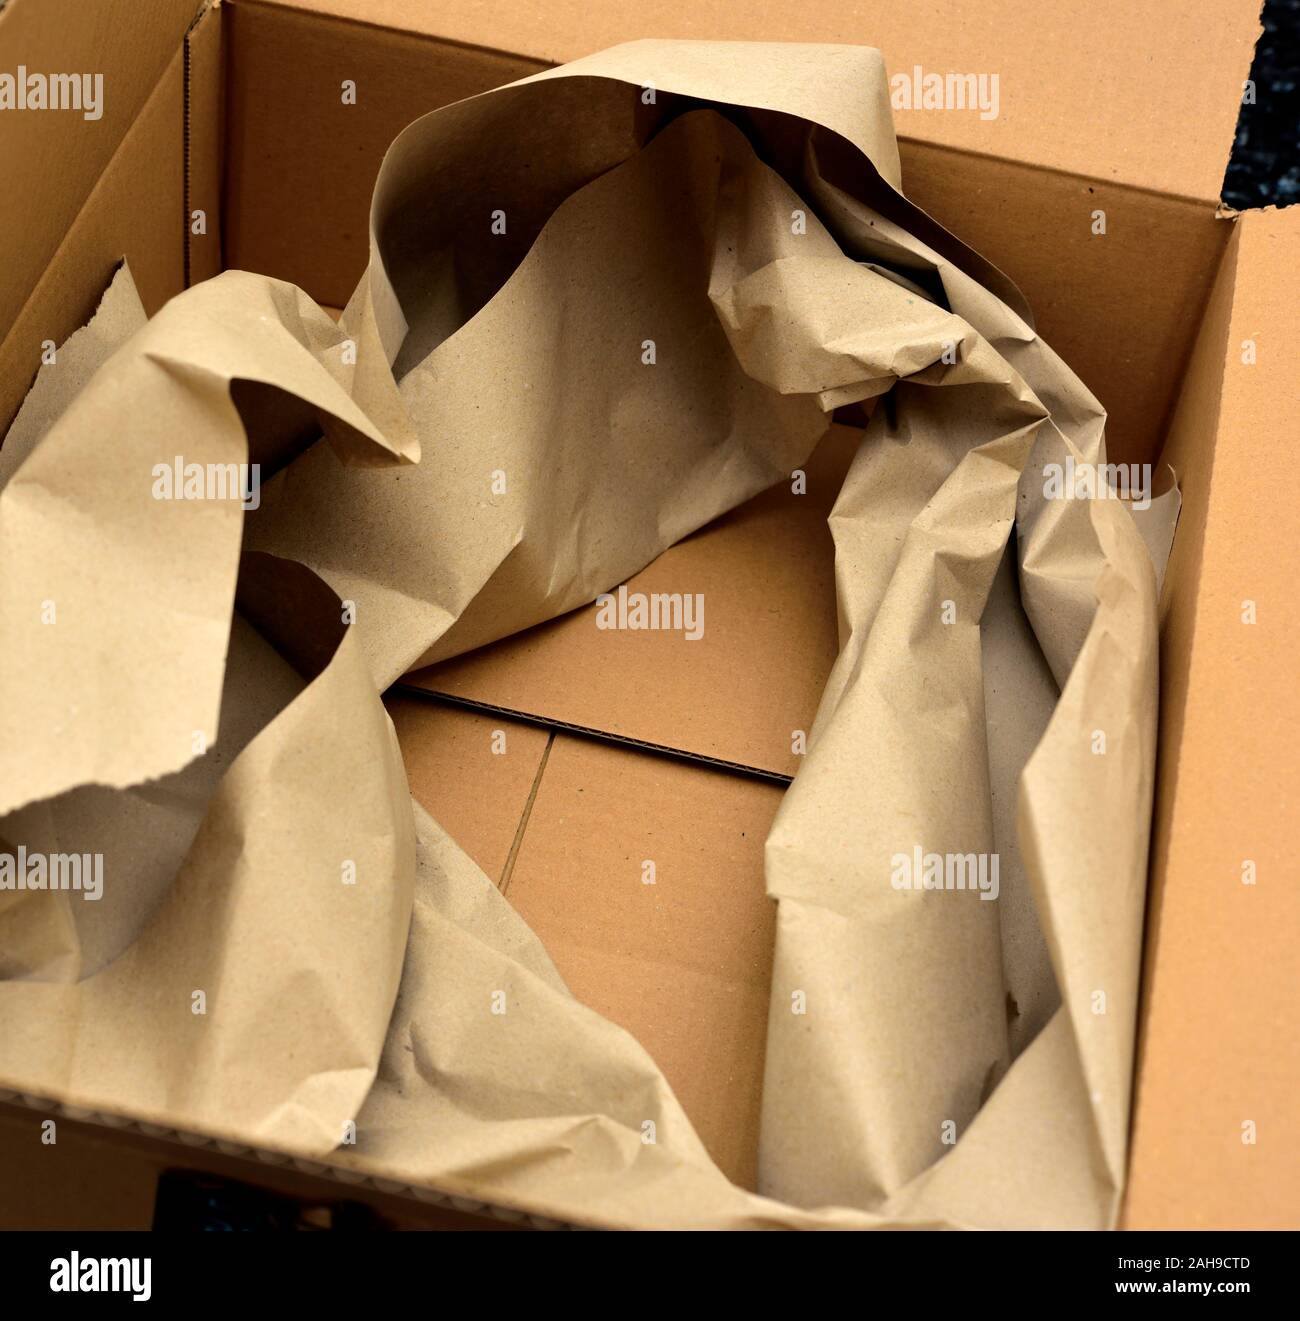 Schutzpapier Verpackung innerhalb einer Amazon Paket Stockfotografie - Alamy